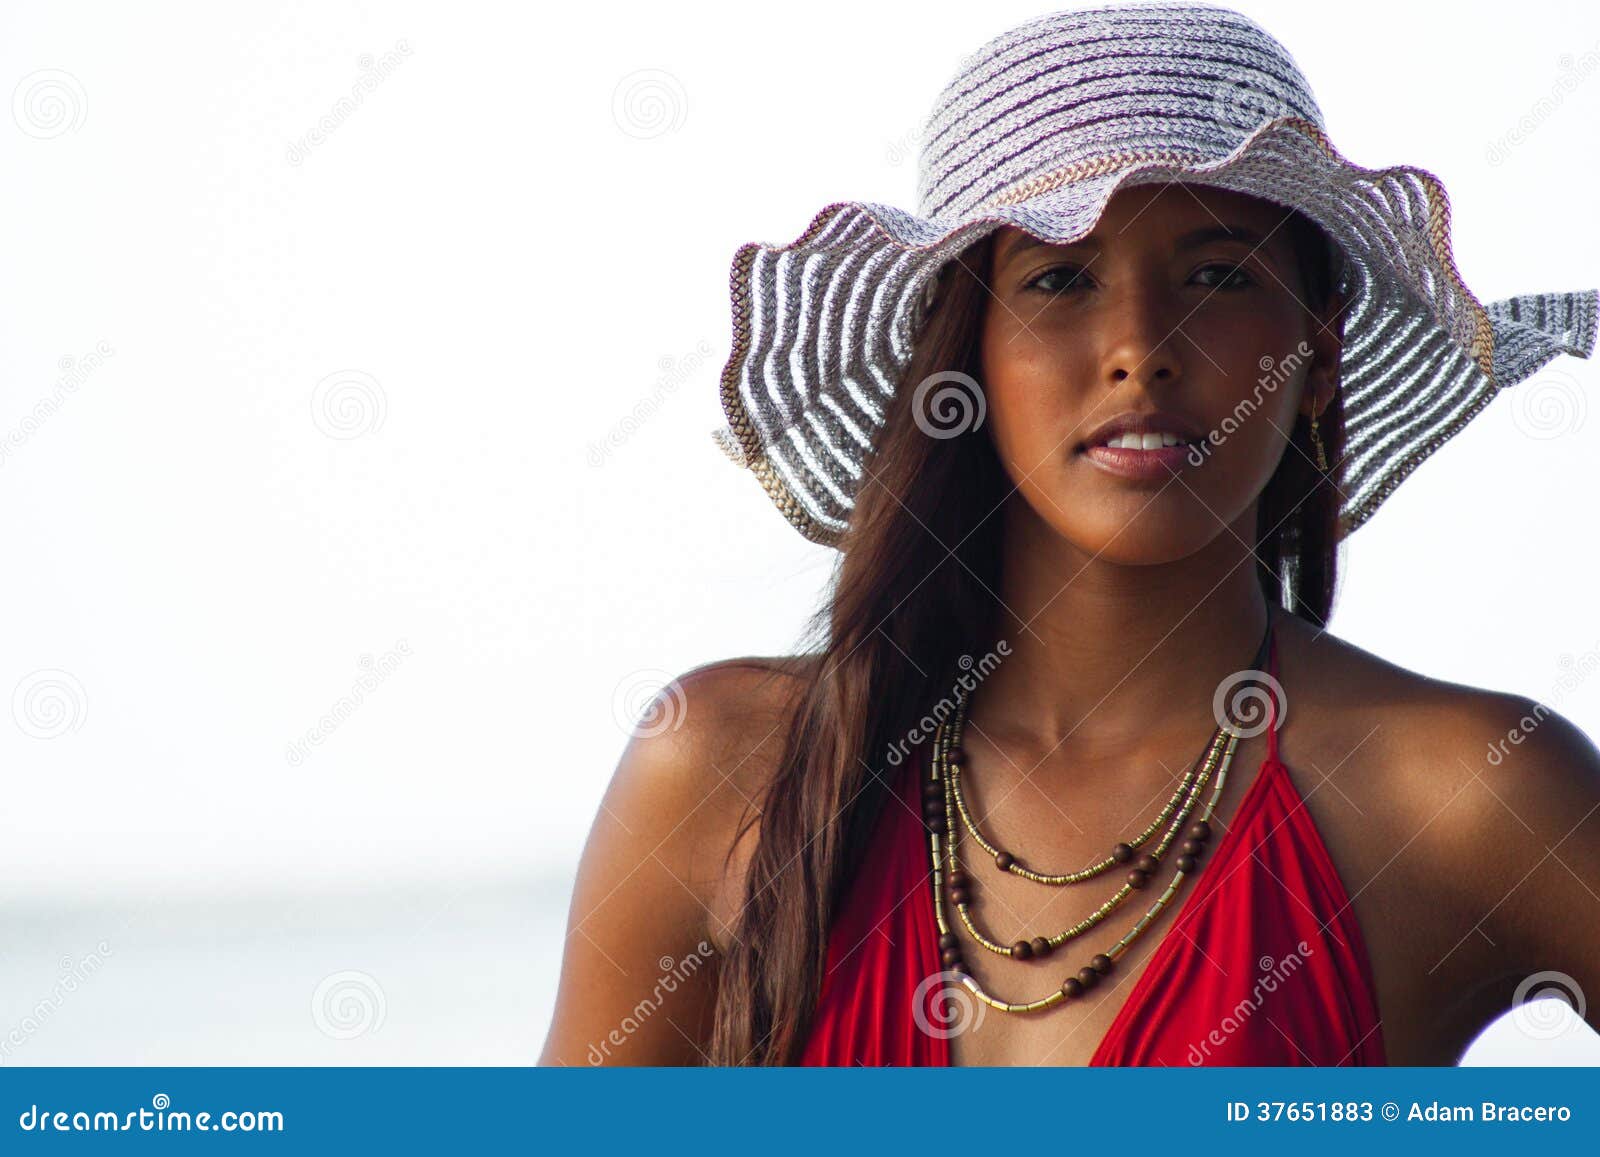 https://thumbs.dreamstime.com/z/young-hispanic-woman-sun-hat-beach-37651883.jpg